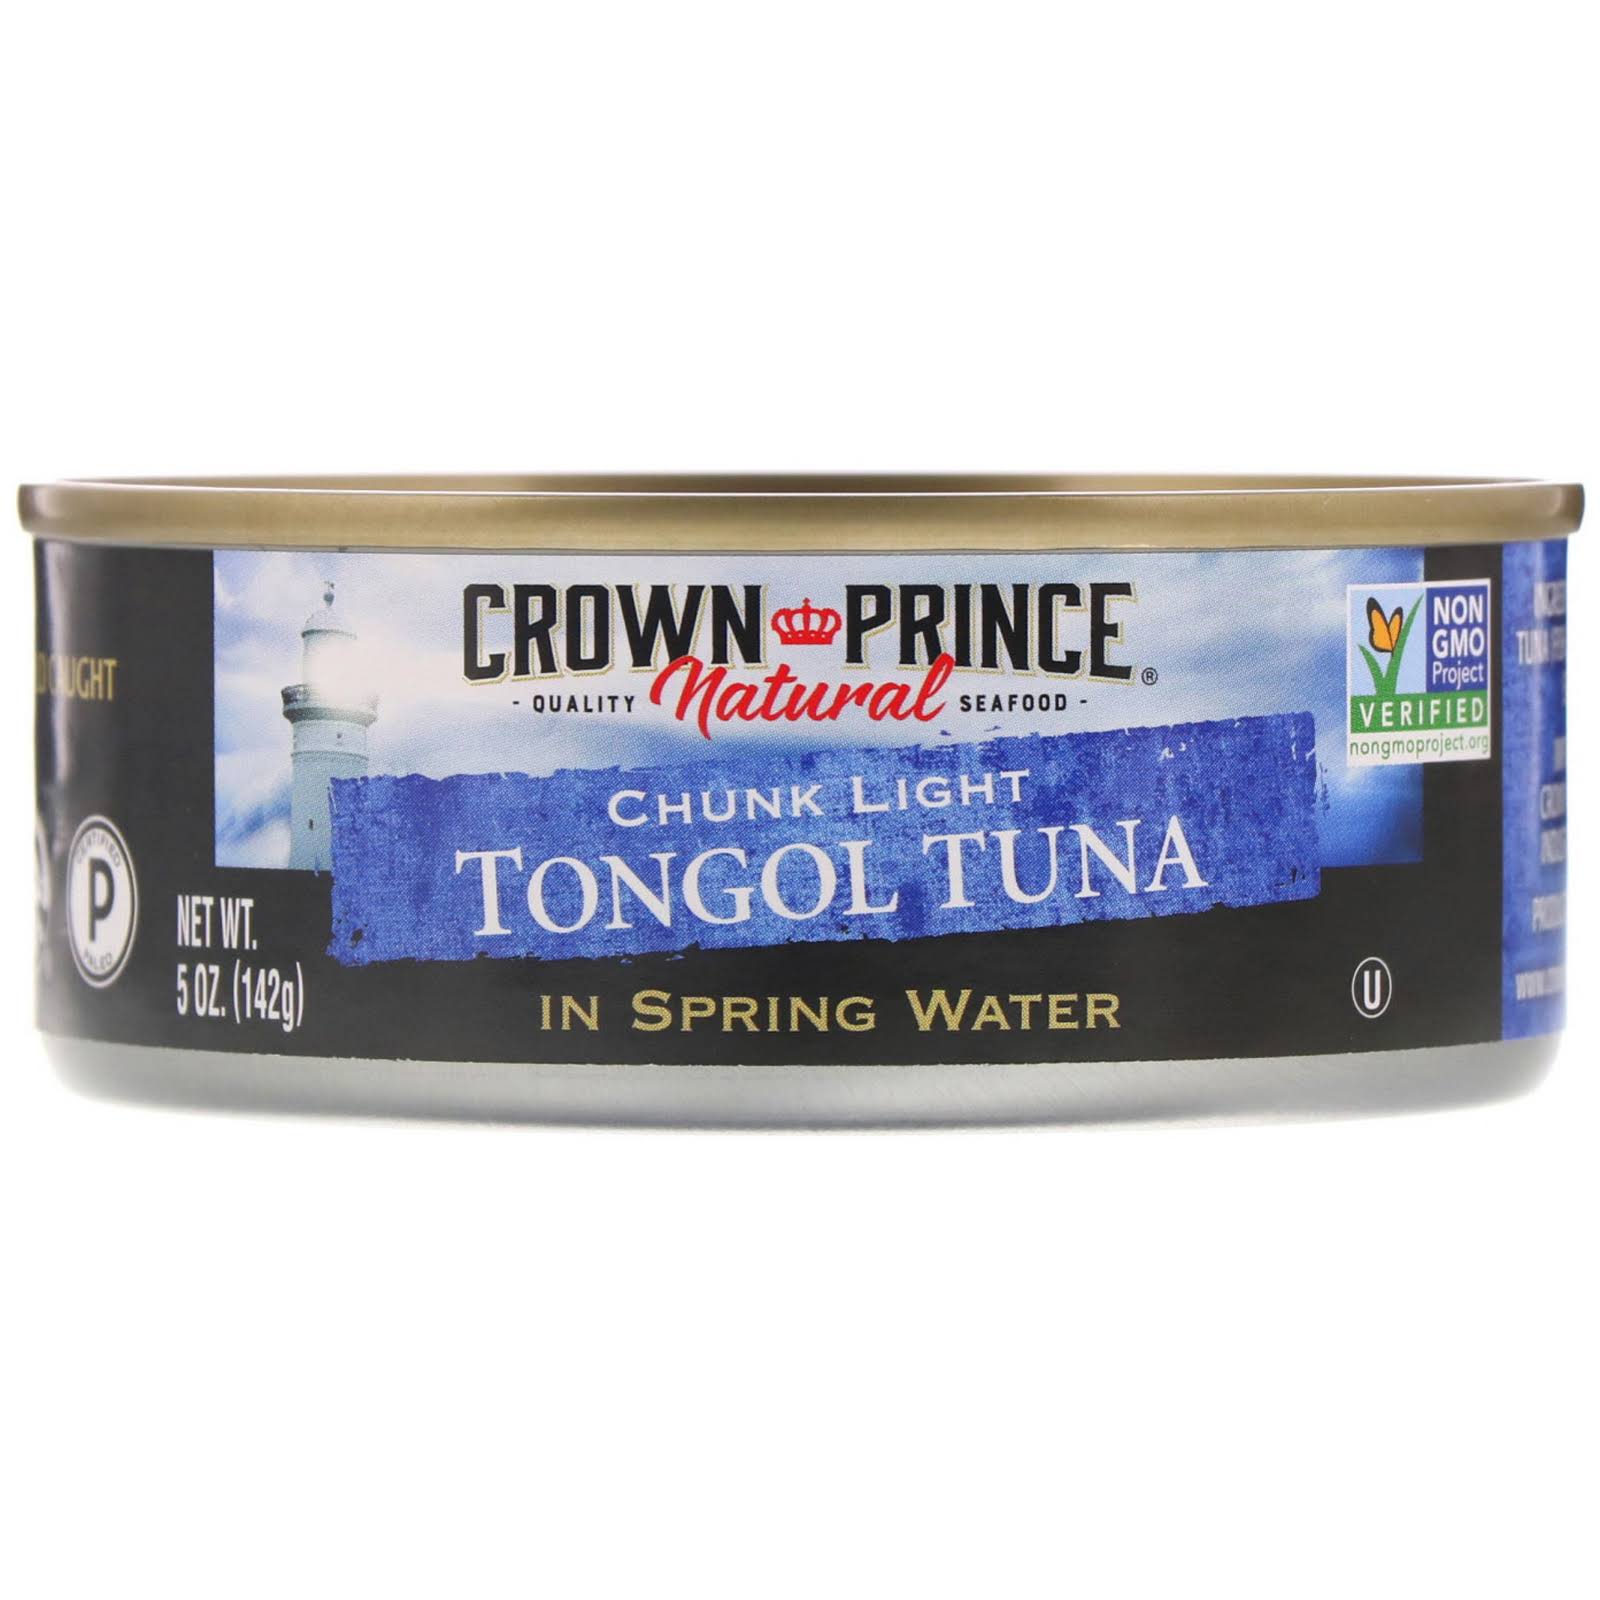 Crown Prince Tongol Tuna in Spring Water - 142g